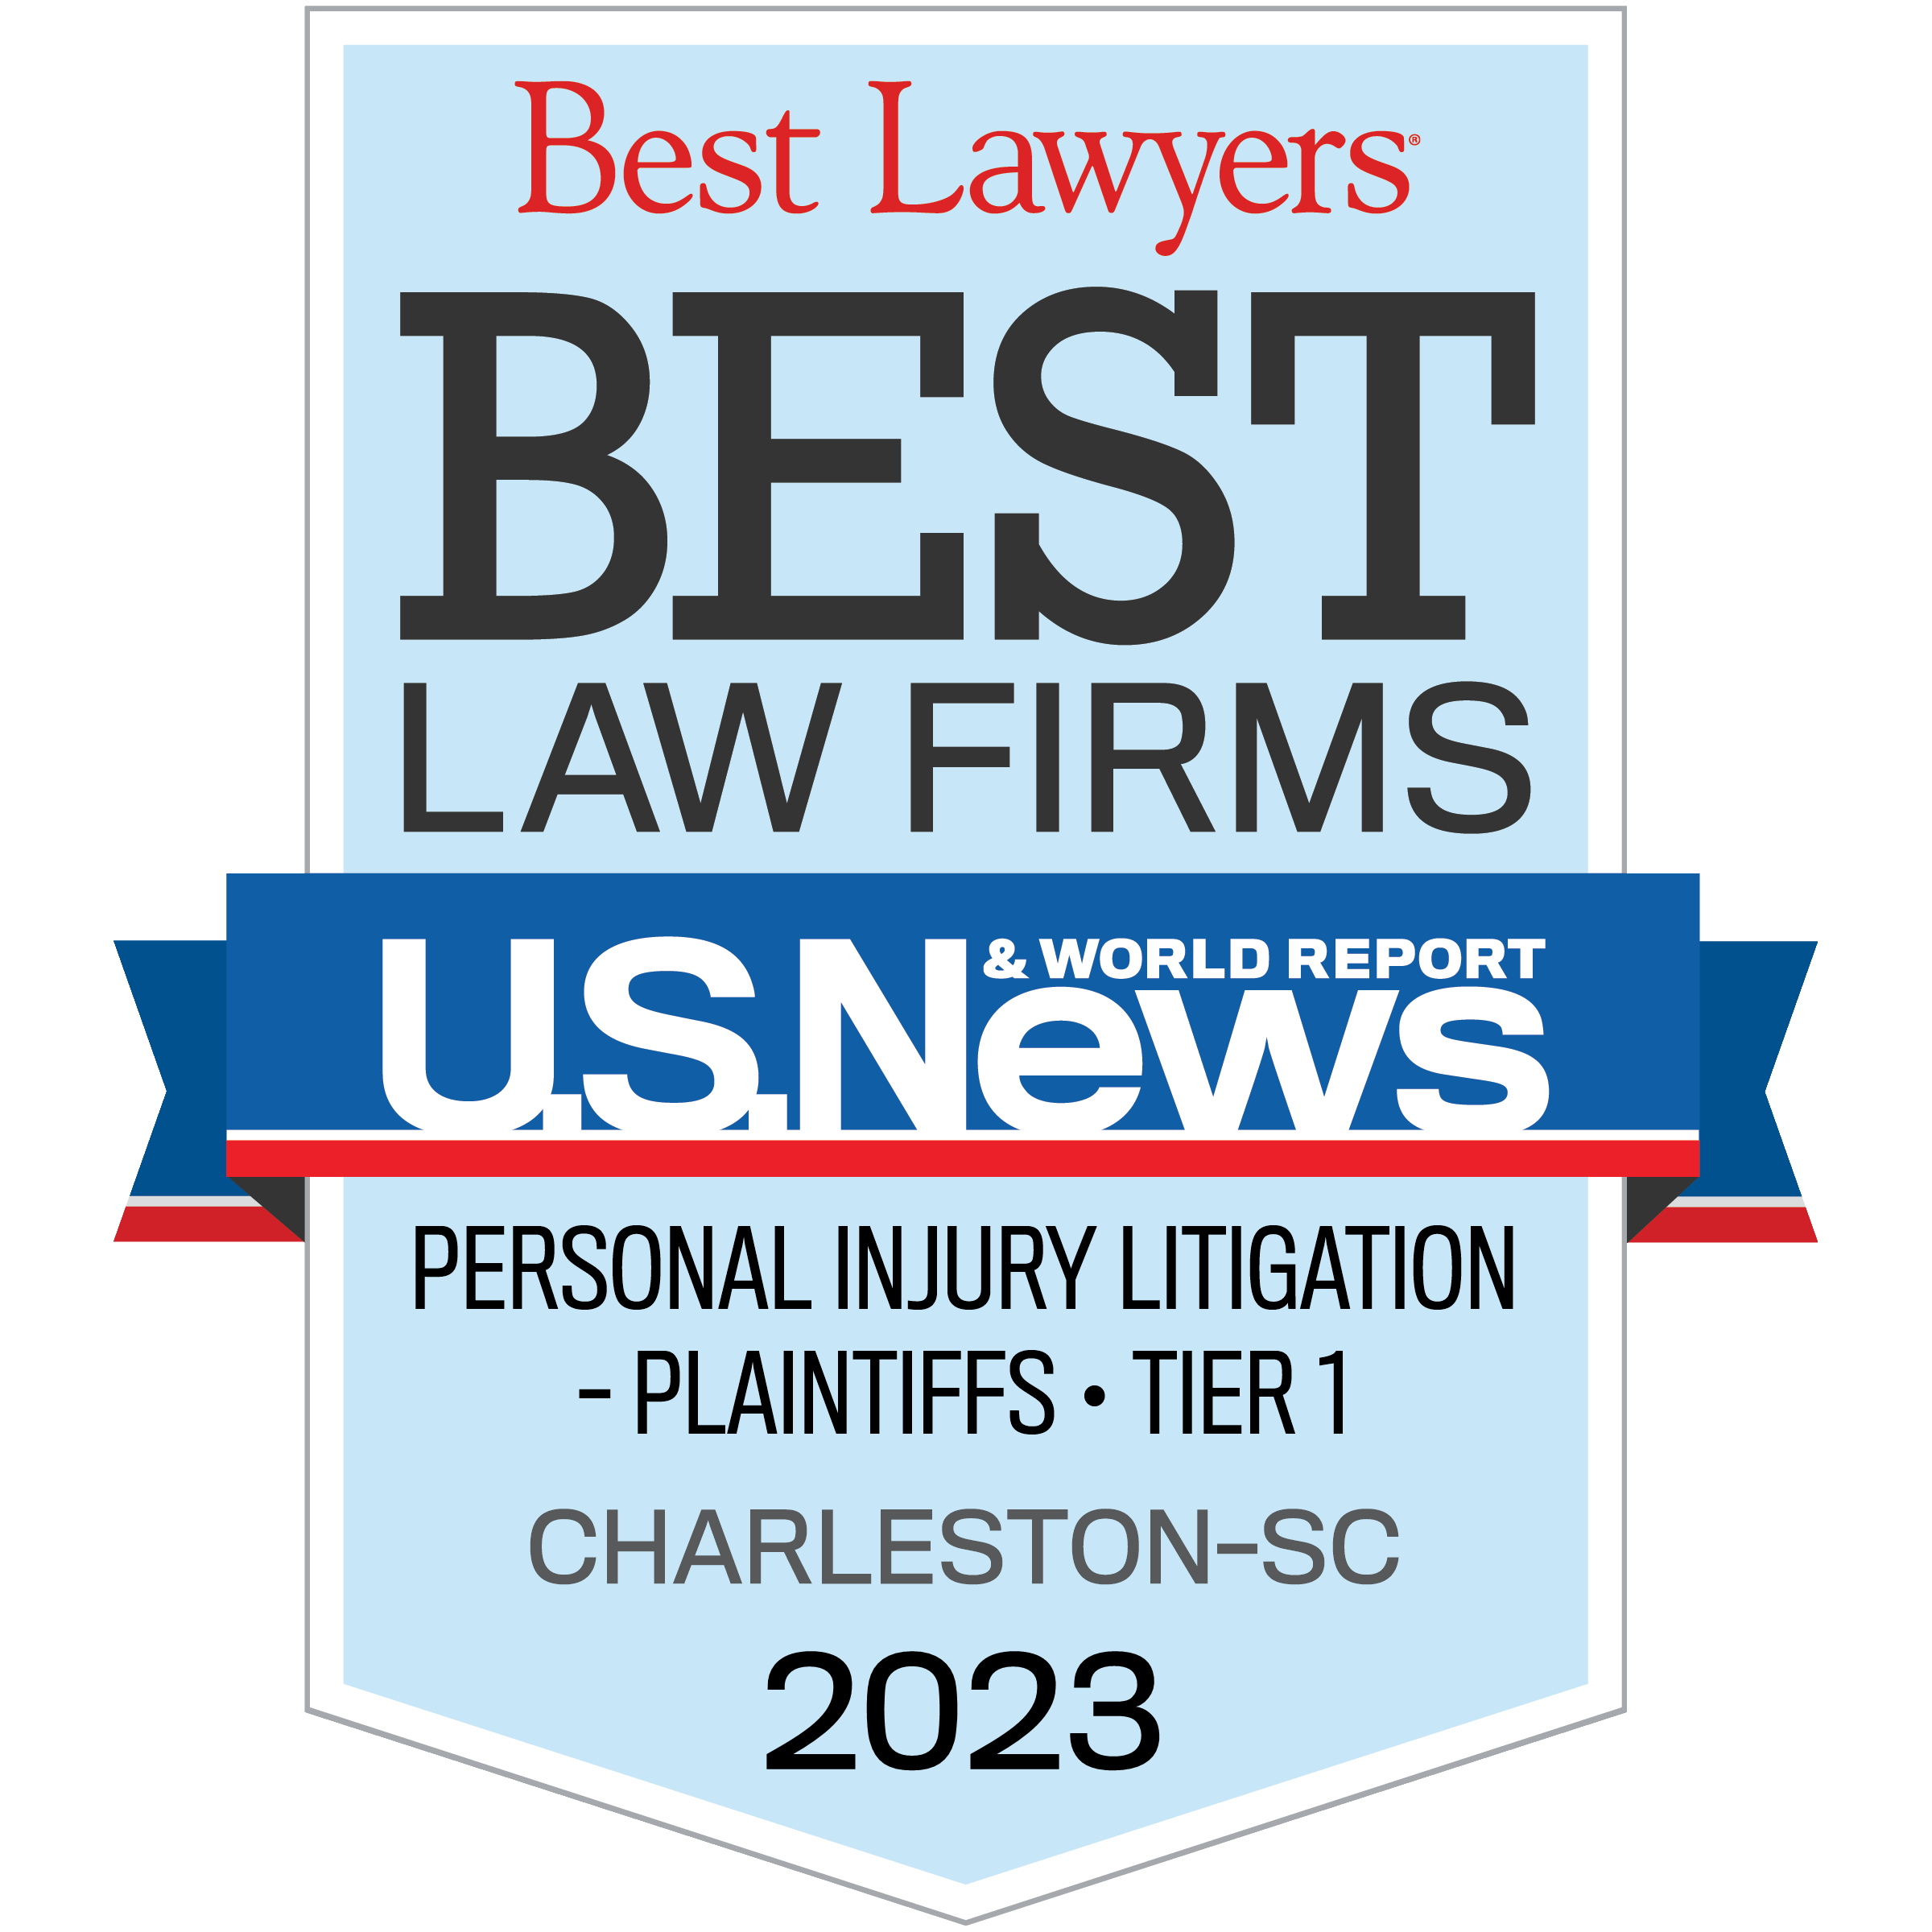 Best Lawyers Best Law Firms U.S.News & World Report Personal Injury Litigation- Plaintiffs Tier 1 Charleston-SC 2023